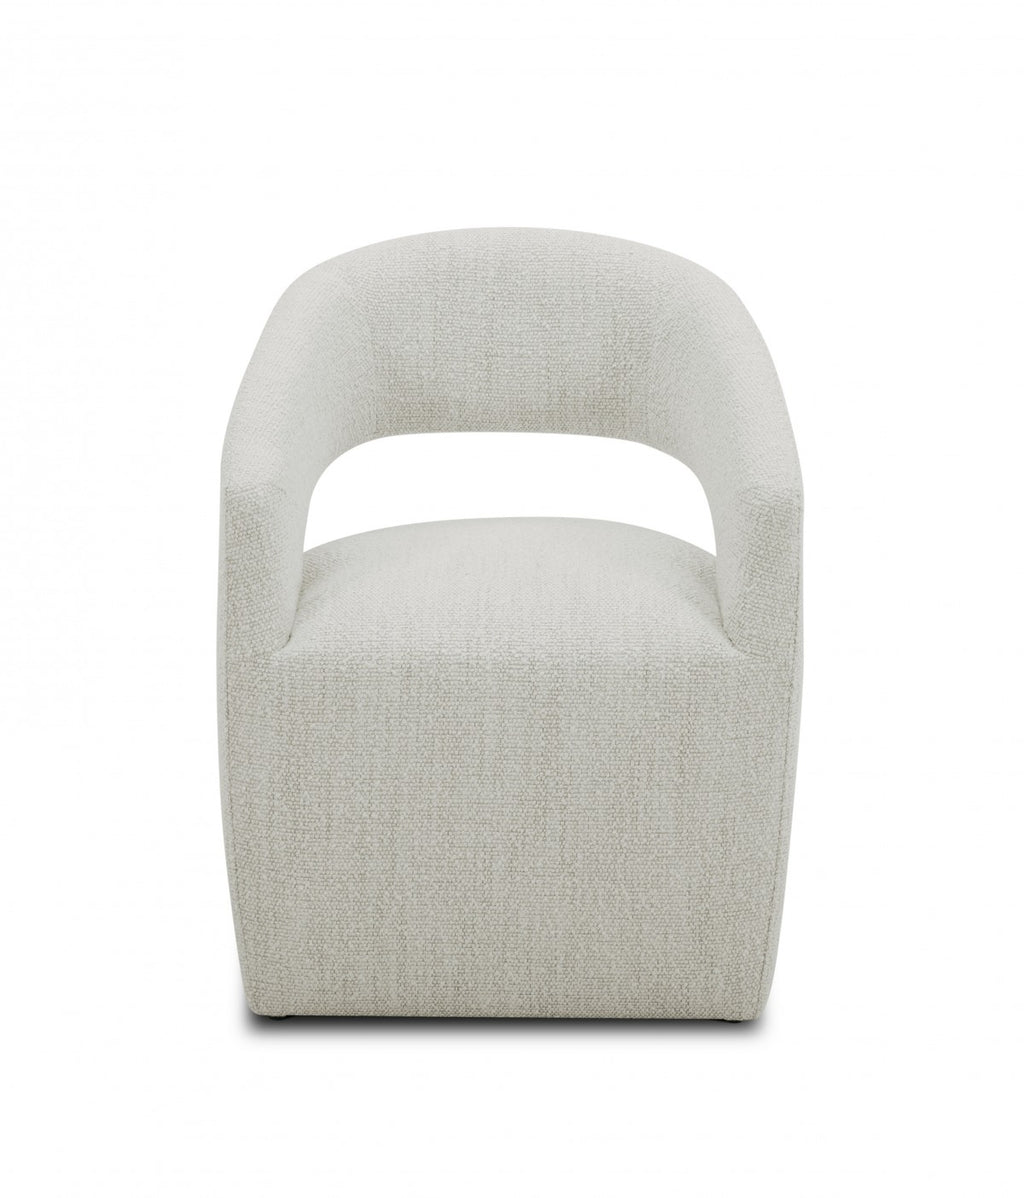 Gastra Cream Modern Fabric Accent Chair